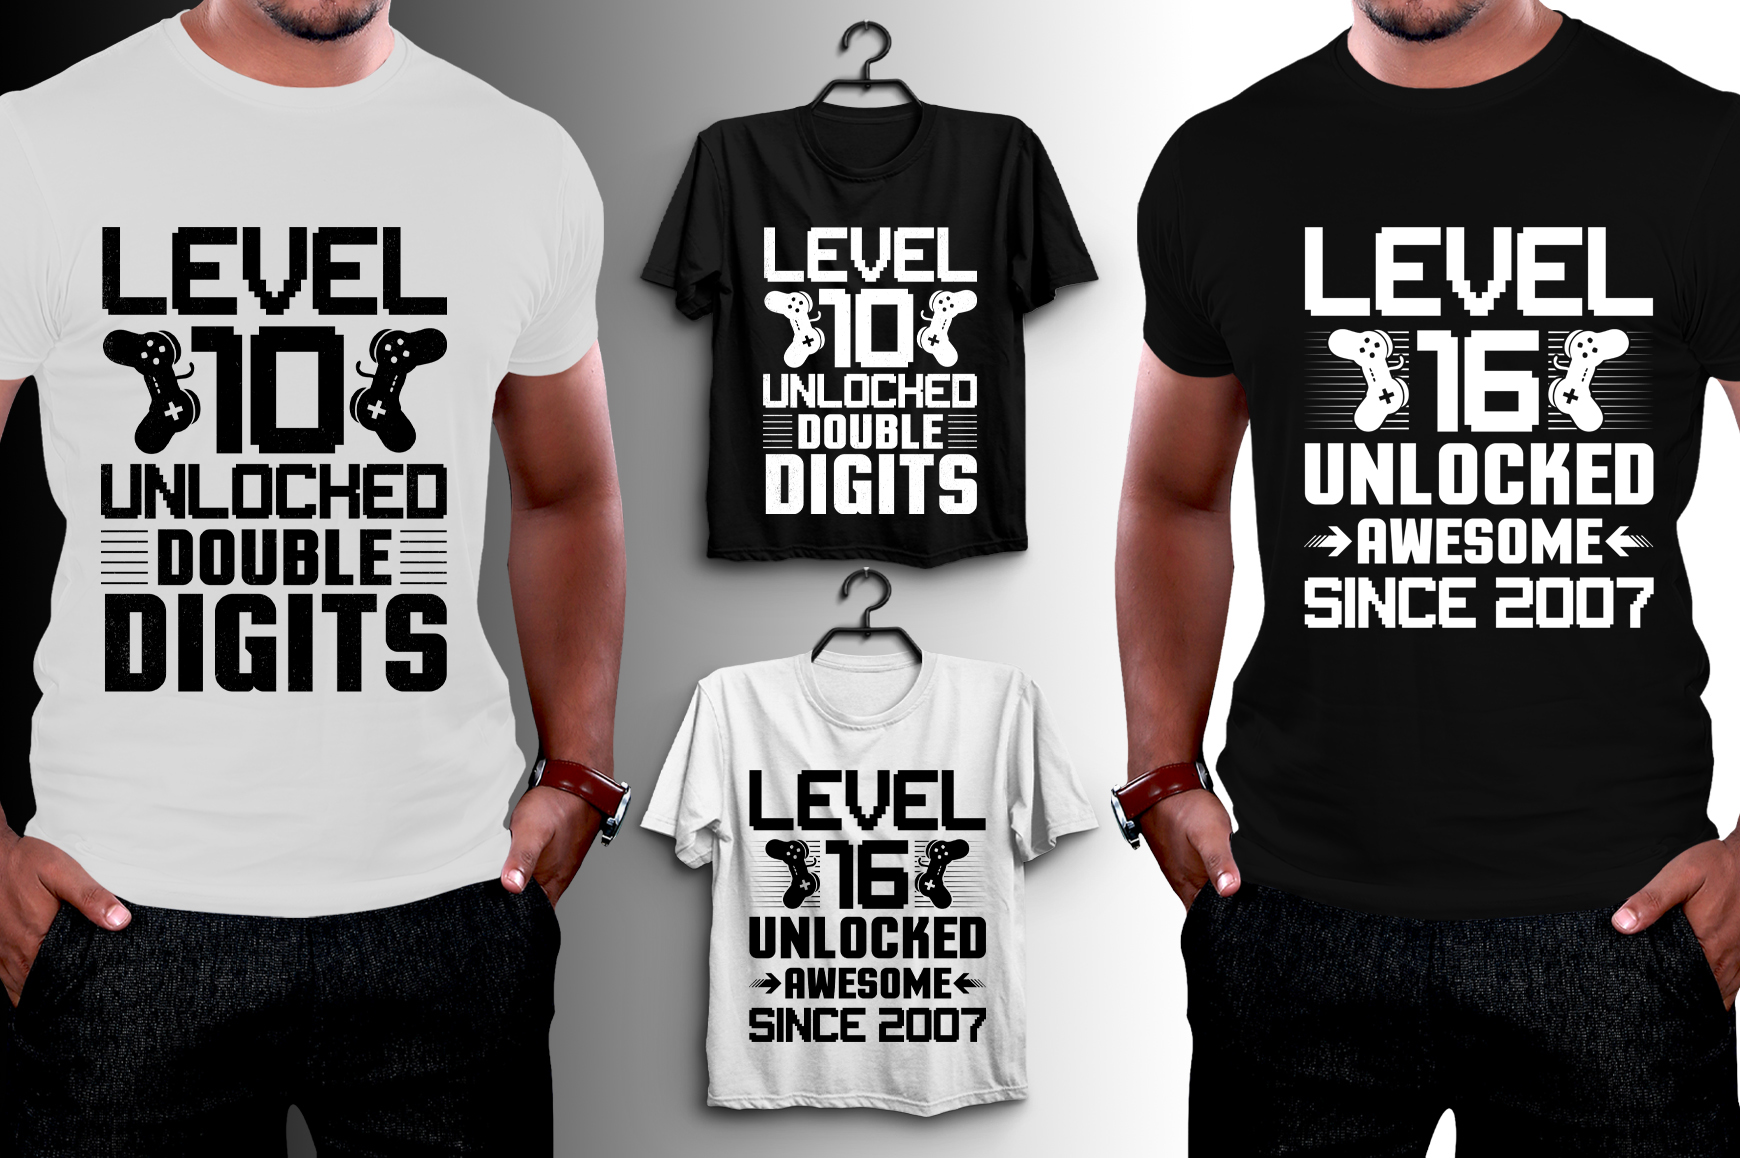 Level Unlocked T-Shirt Design,Level Unlocked,Level Unlocked TShirt creative Design,Level Unlocked Unlocked T-shirt Gifts,Level T-Shirt,Level Design,Level fabrica,Level Unlocked TShirt,Level Unlocked Pod,Level Unlocked Unlocked T-Shirt T-shirt T-shirt